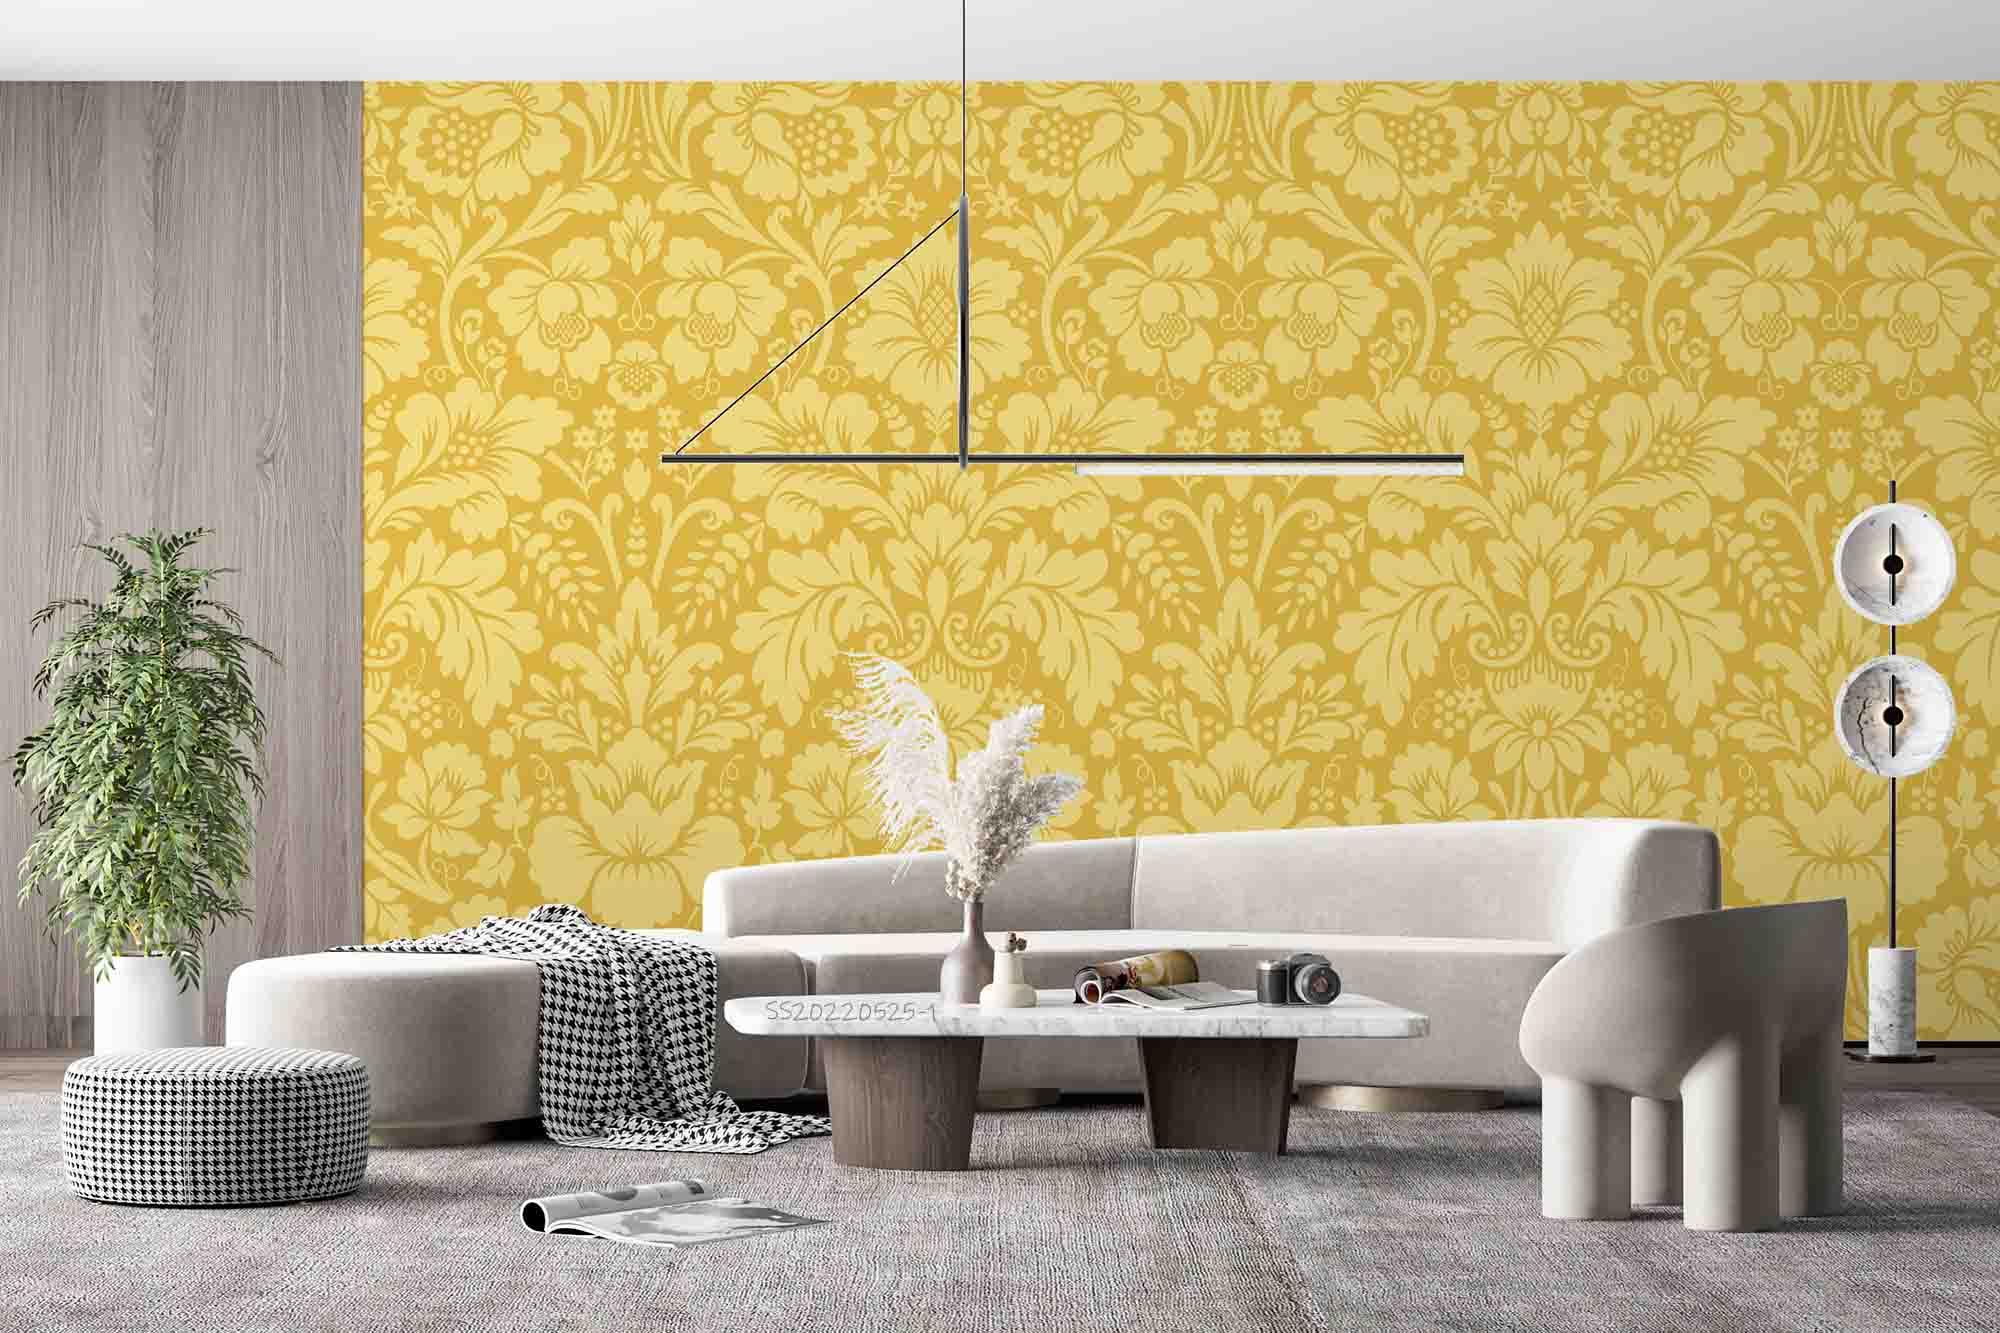 3D Vintage Golden Floral Background Wall Mural Wallpaper GD 4765- Jess Art Decoration